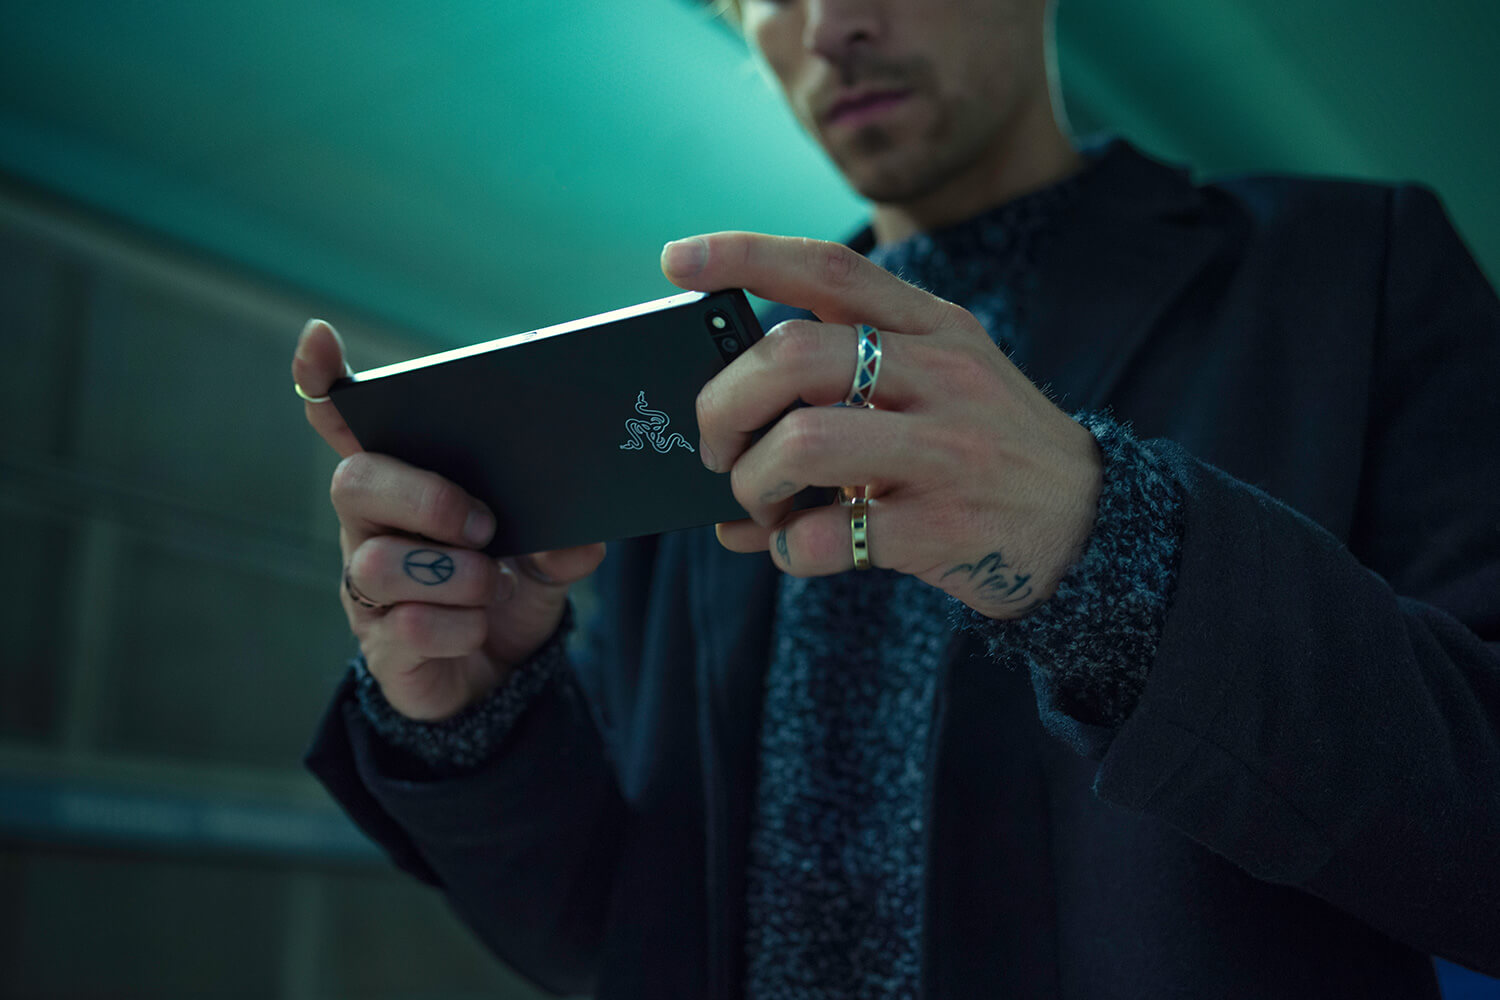 Razer phone announced with Adaptable DIsplay, 8GB RAM 3